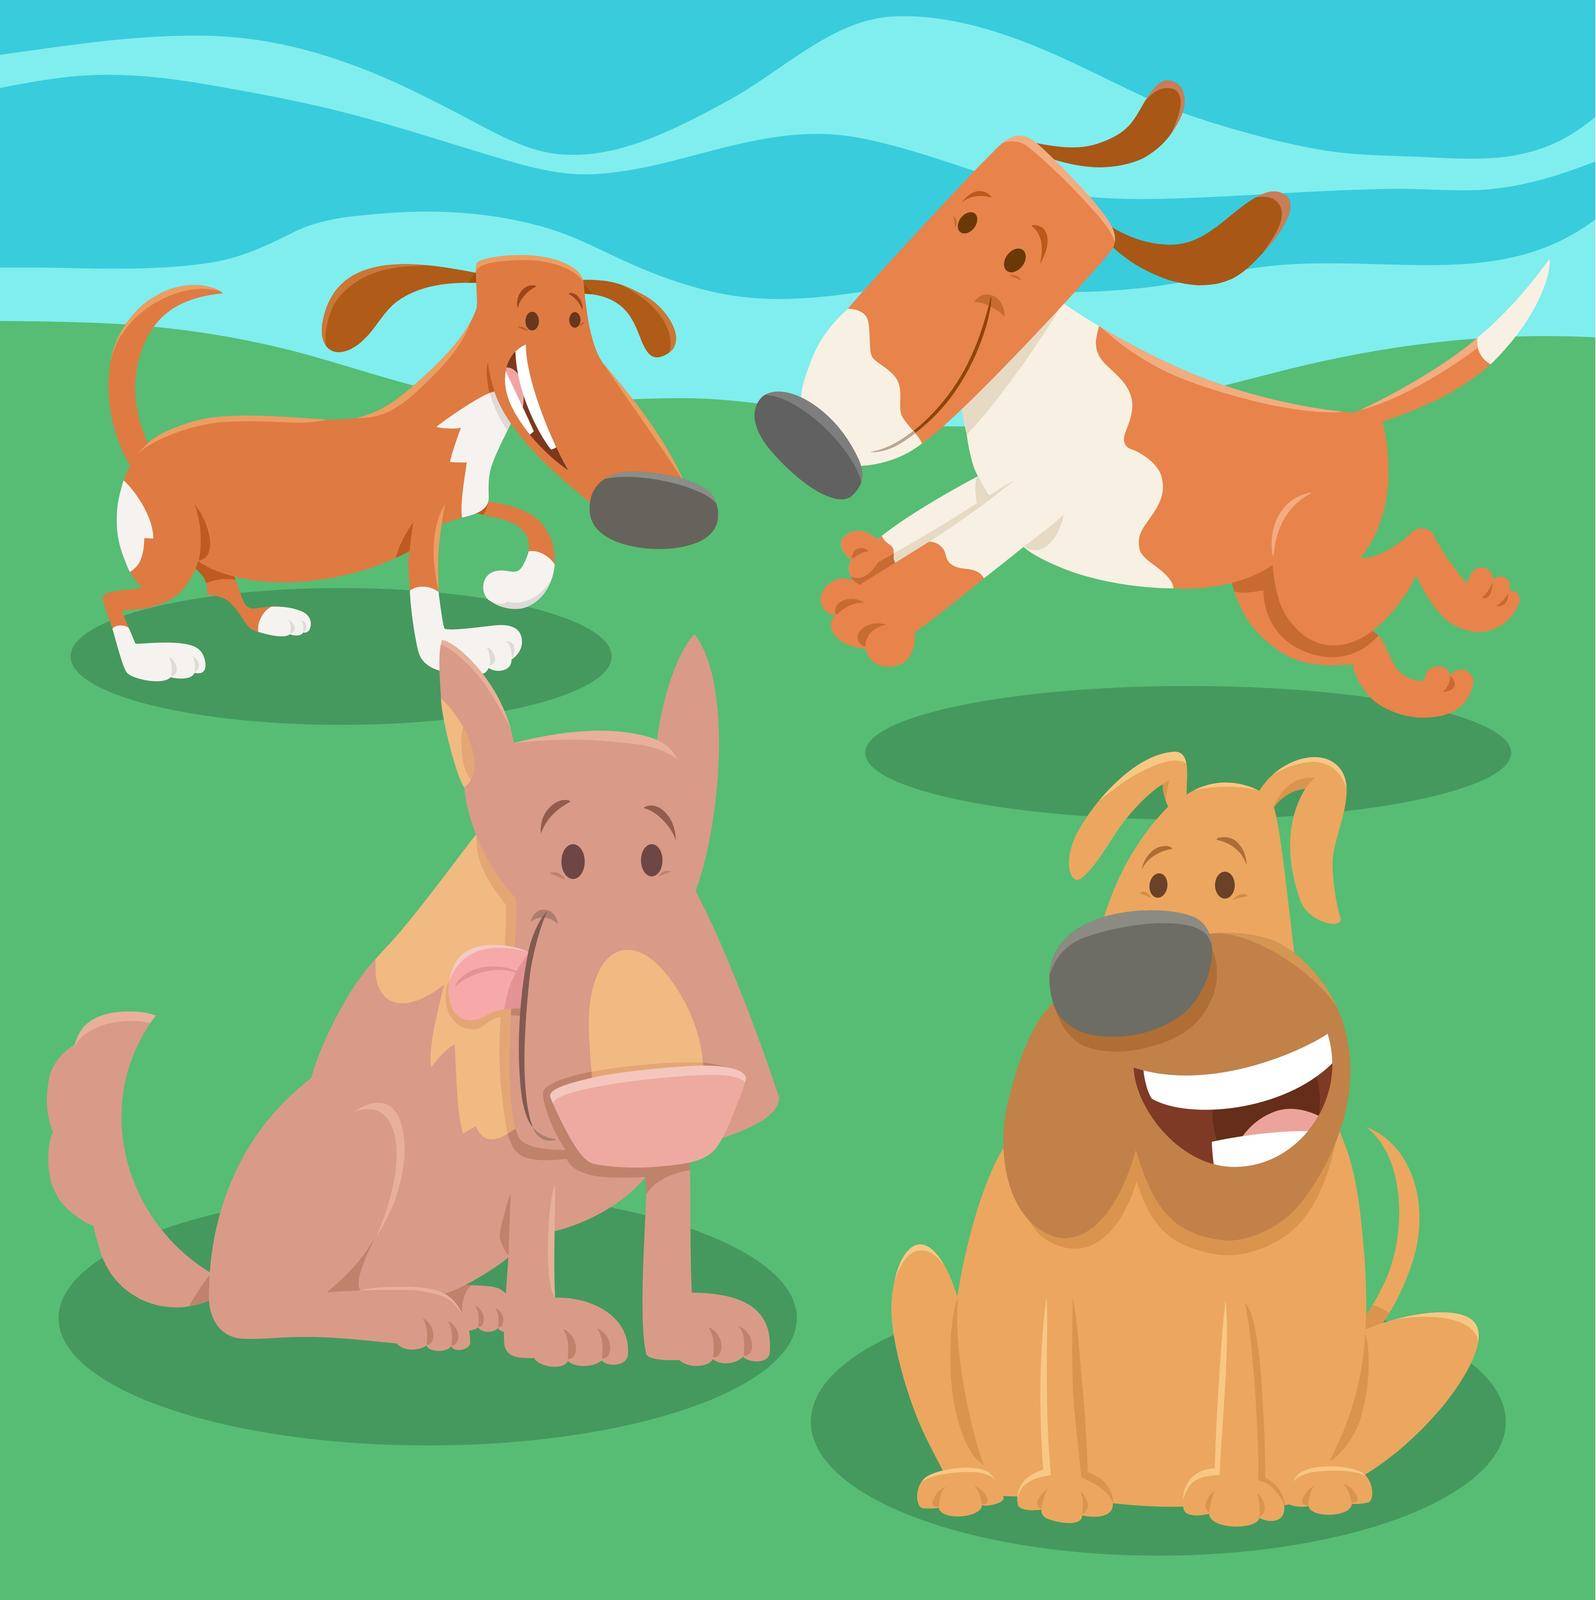 playful cartoon dogs animal characters group by izakowski